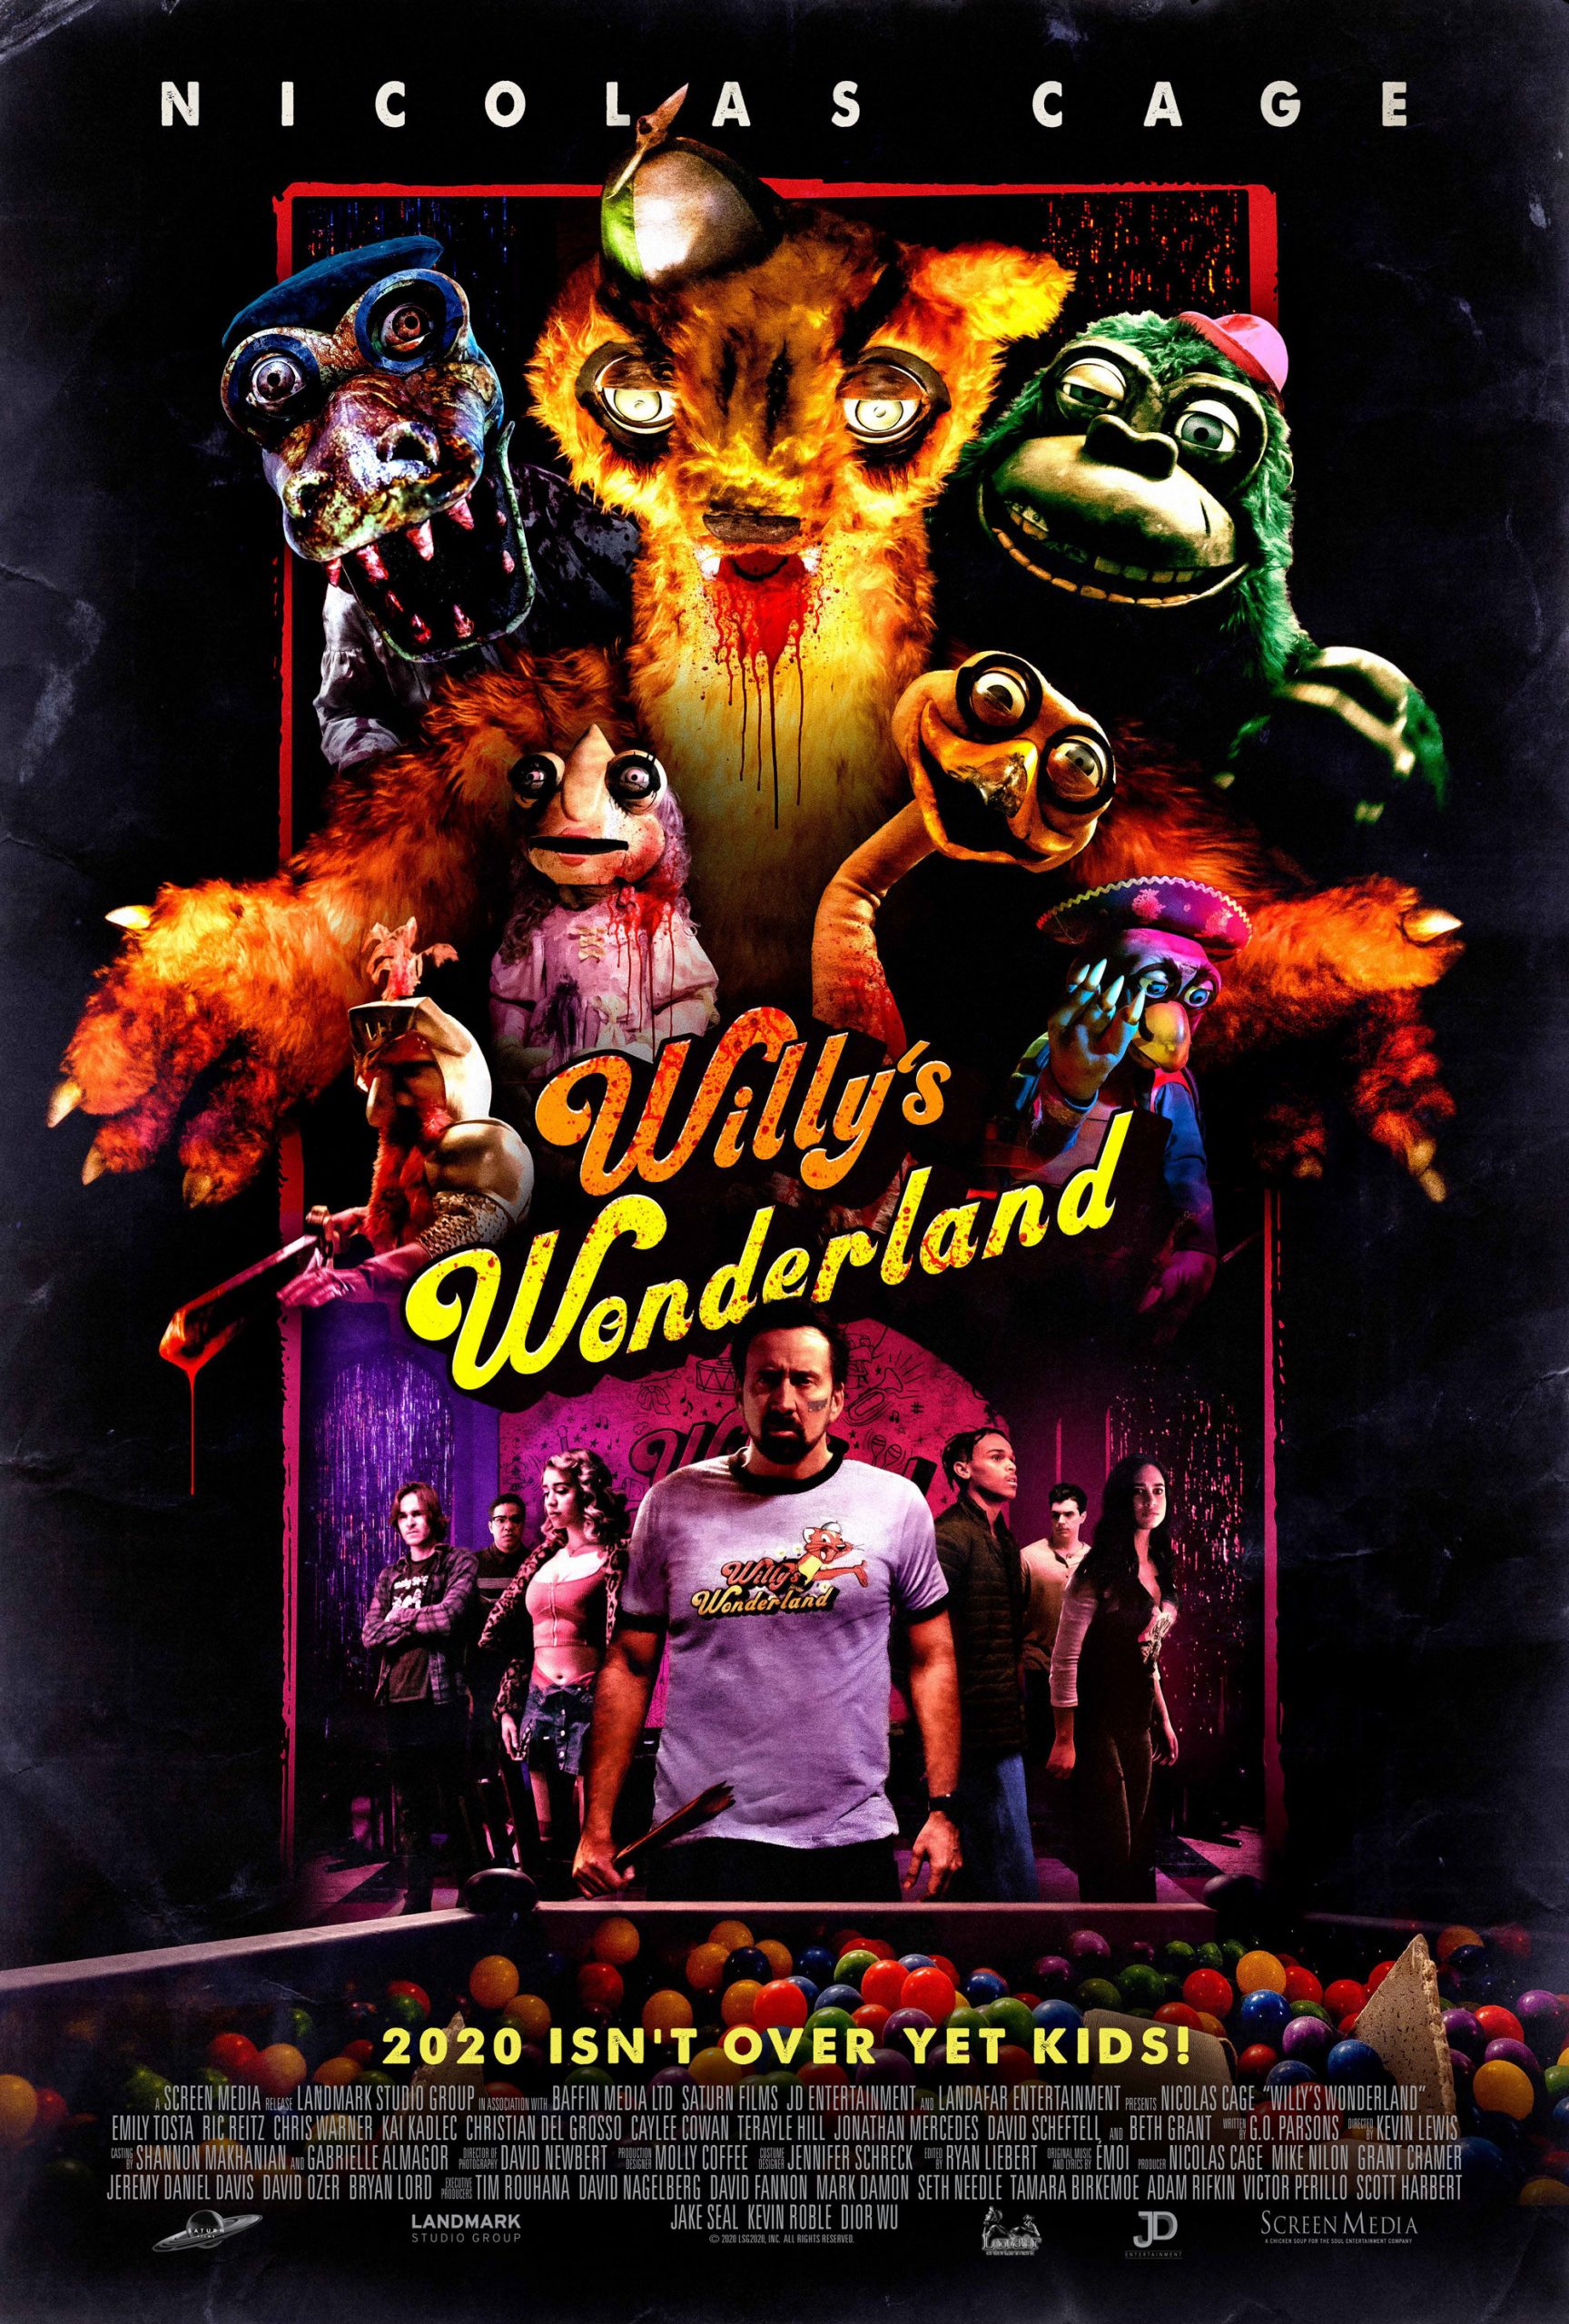 Nicoles Cage Enfrenta Animatrônicos Bizarros em “Willy’s Wonderland”